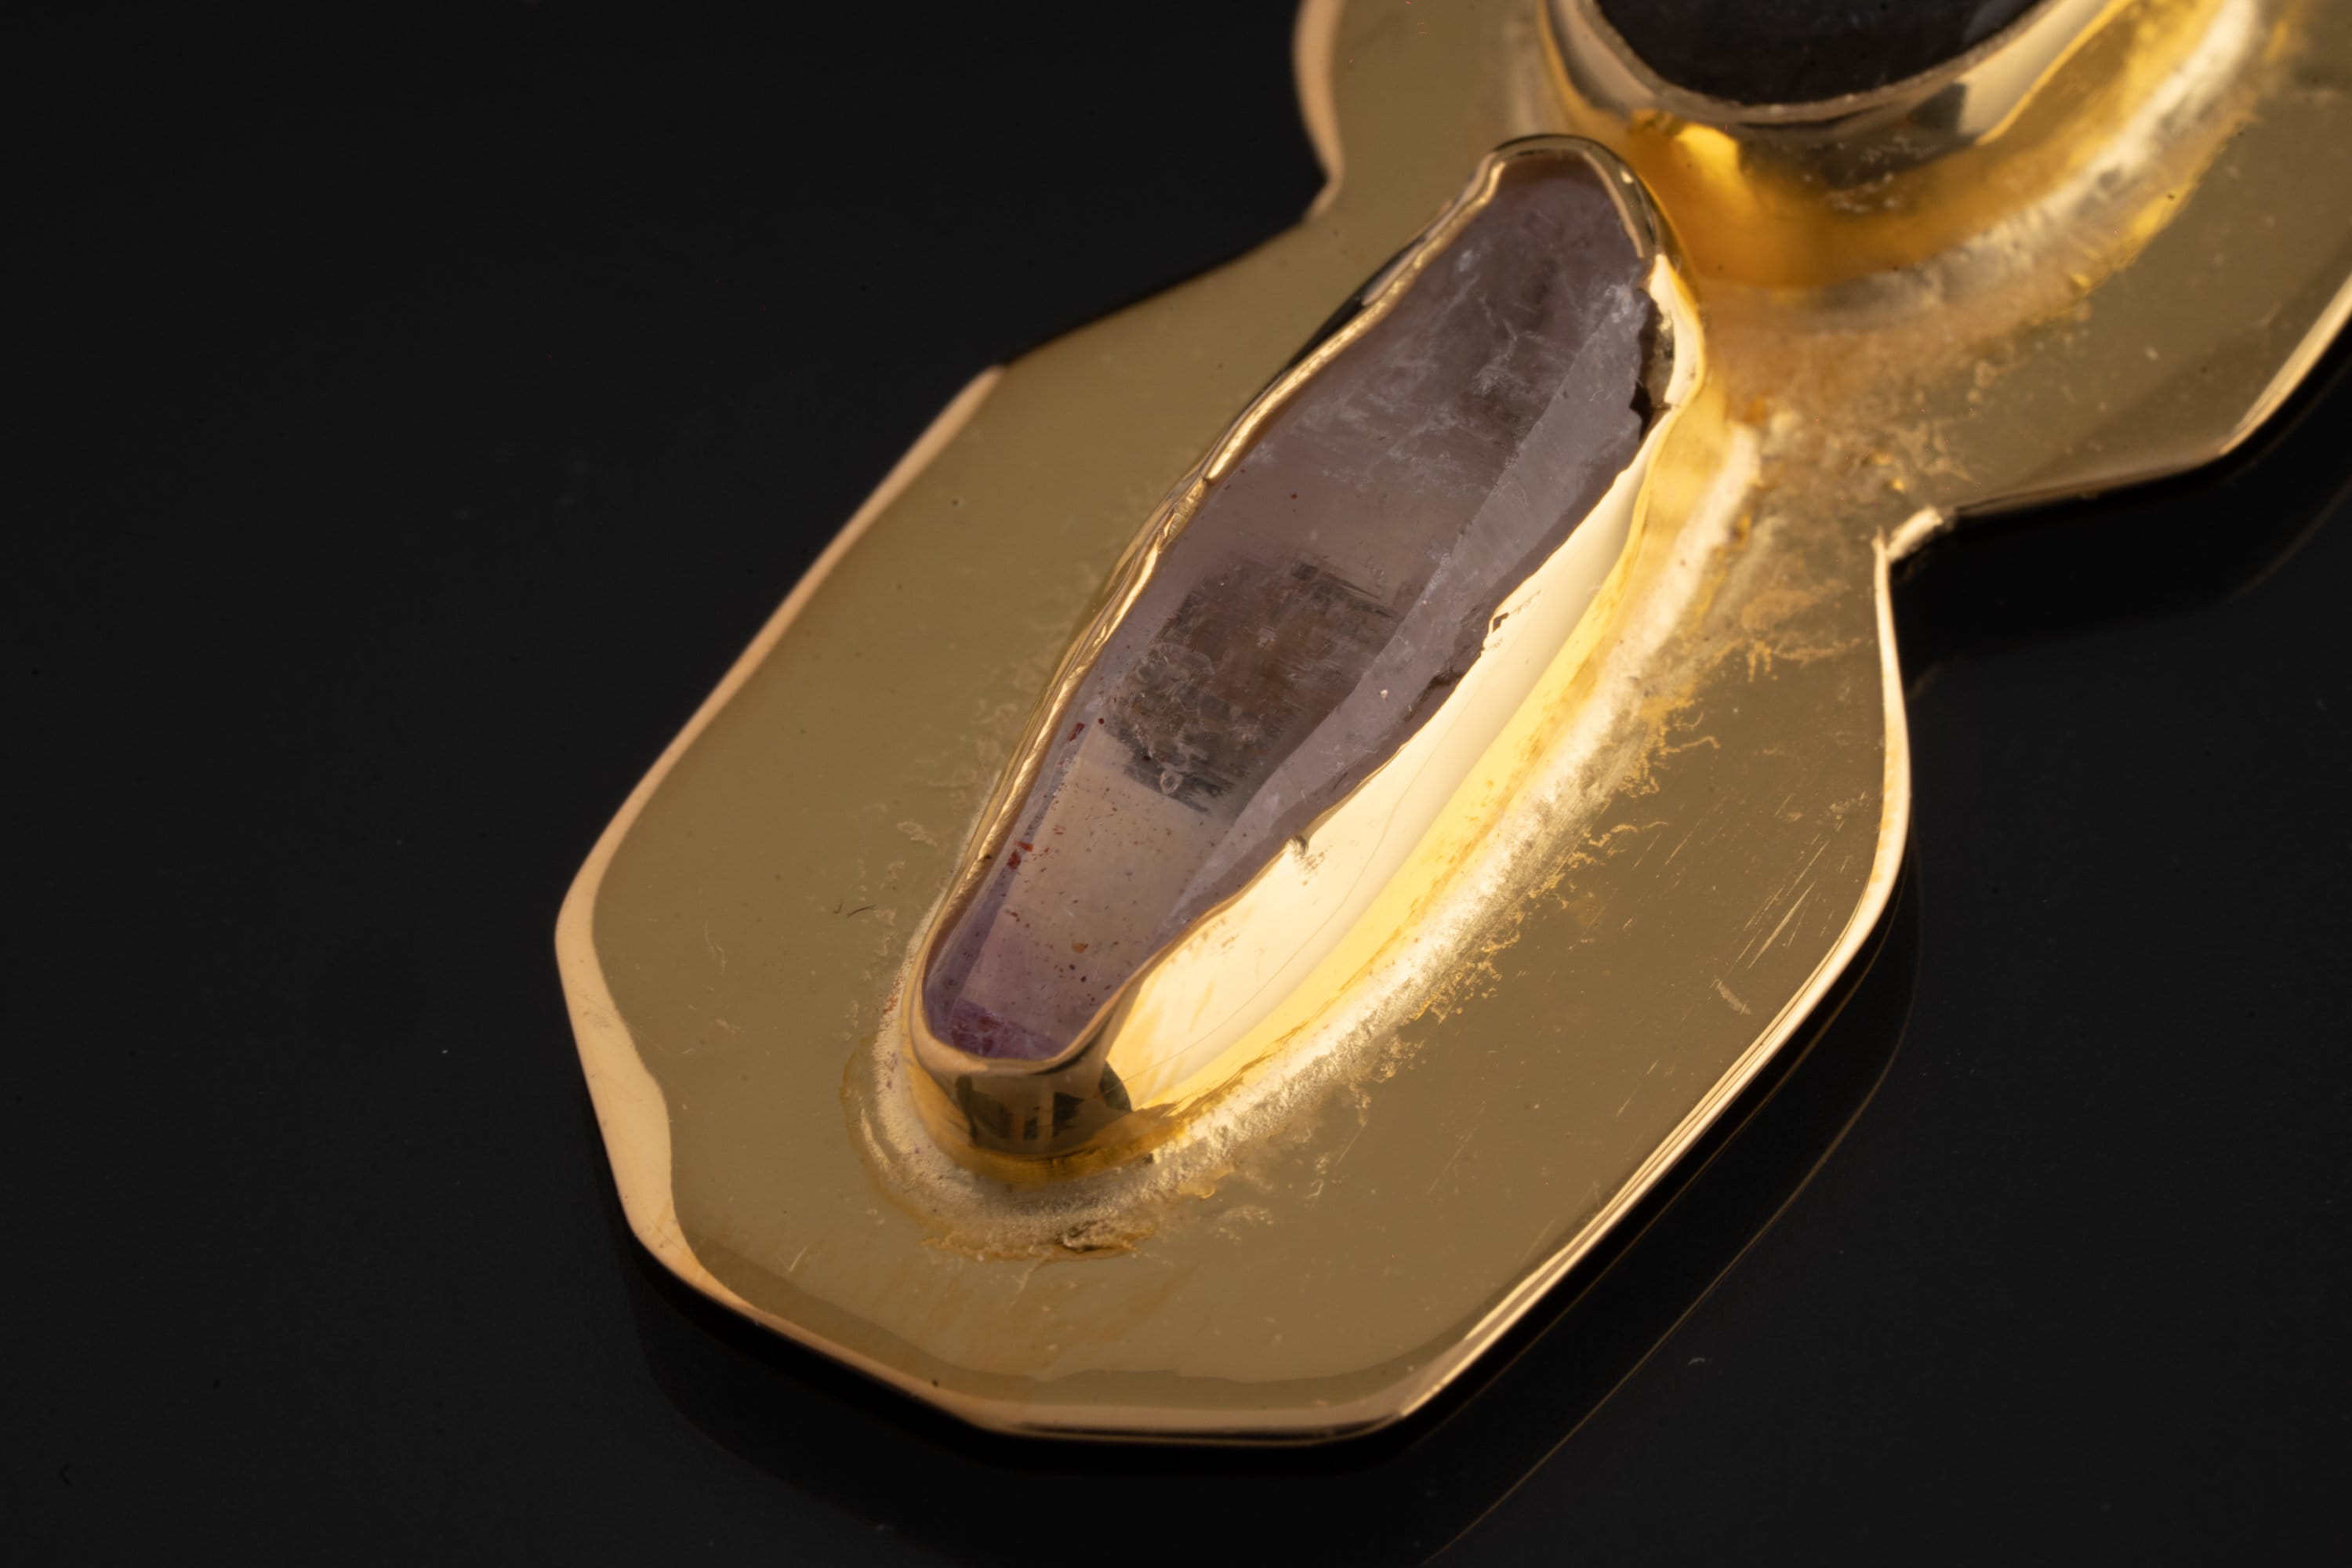 Brass Pendant adorned with Oval Labradorite & Vera Cruz Amethyst - Gold Plated - Double Bail Design